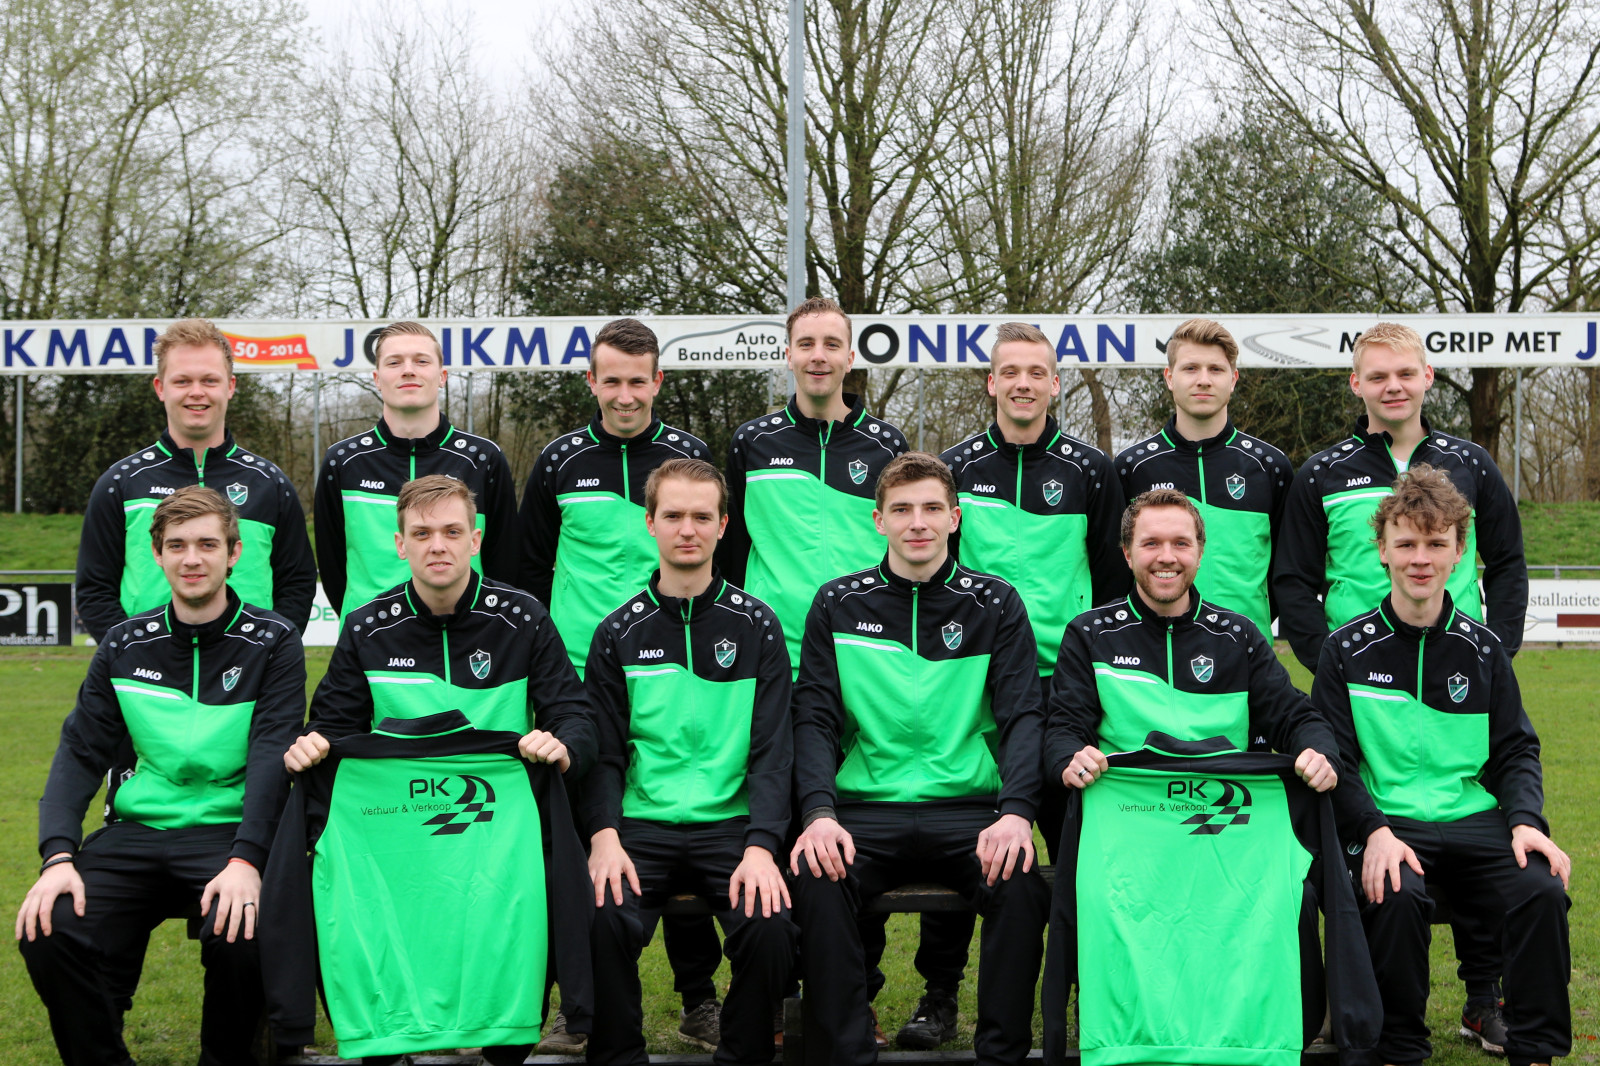 PK Verhuur & Verkoop - nieuwe teamsponsor 3e elftal